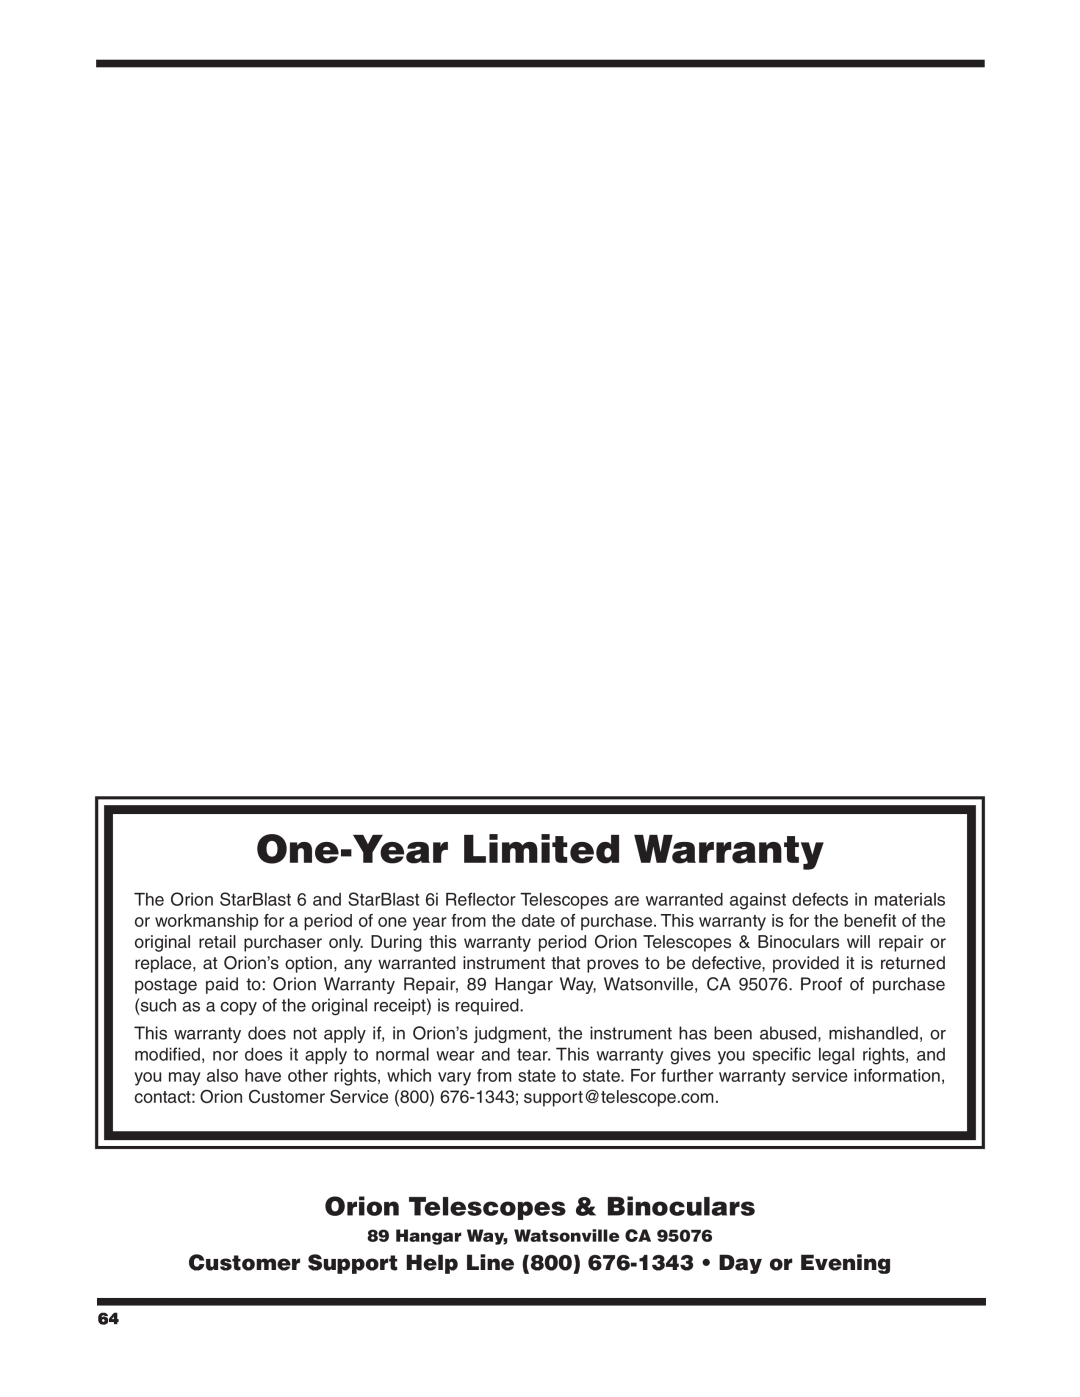 Orion 6/6I instruction manual One-YearLimited Warranty, Orion Telescopes & Binoculars, Hangar Way, Watsonville CA 